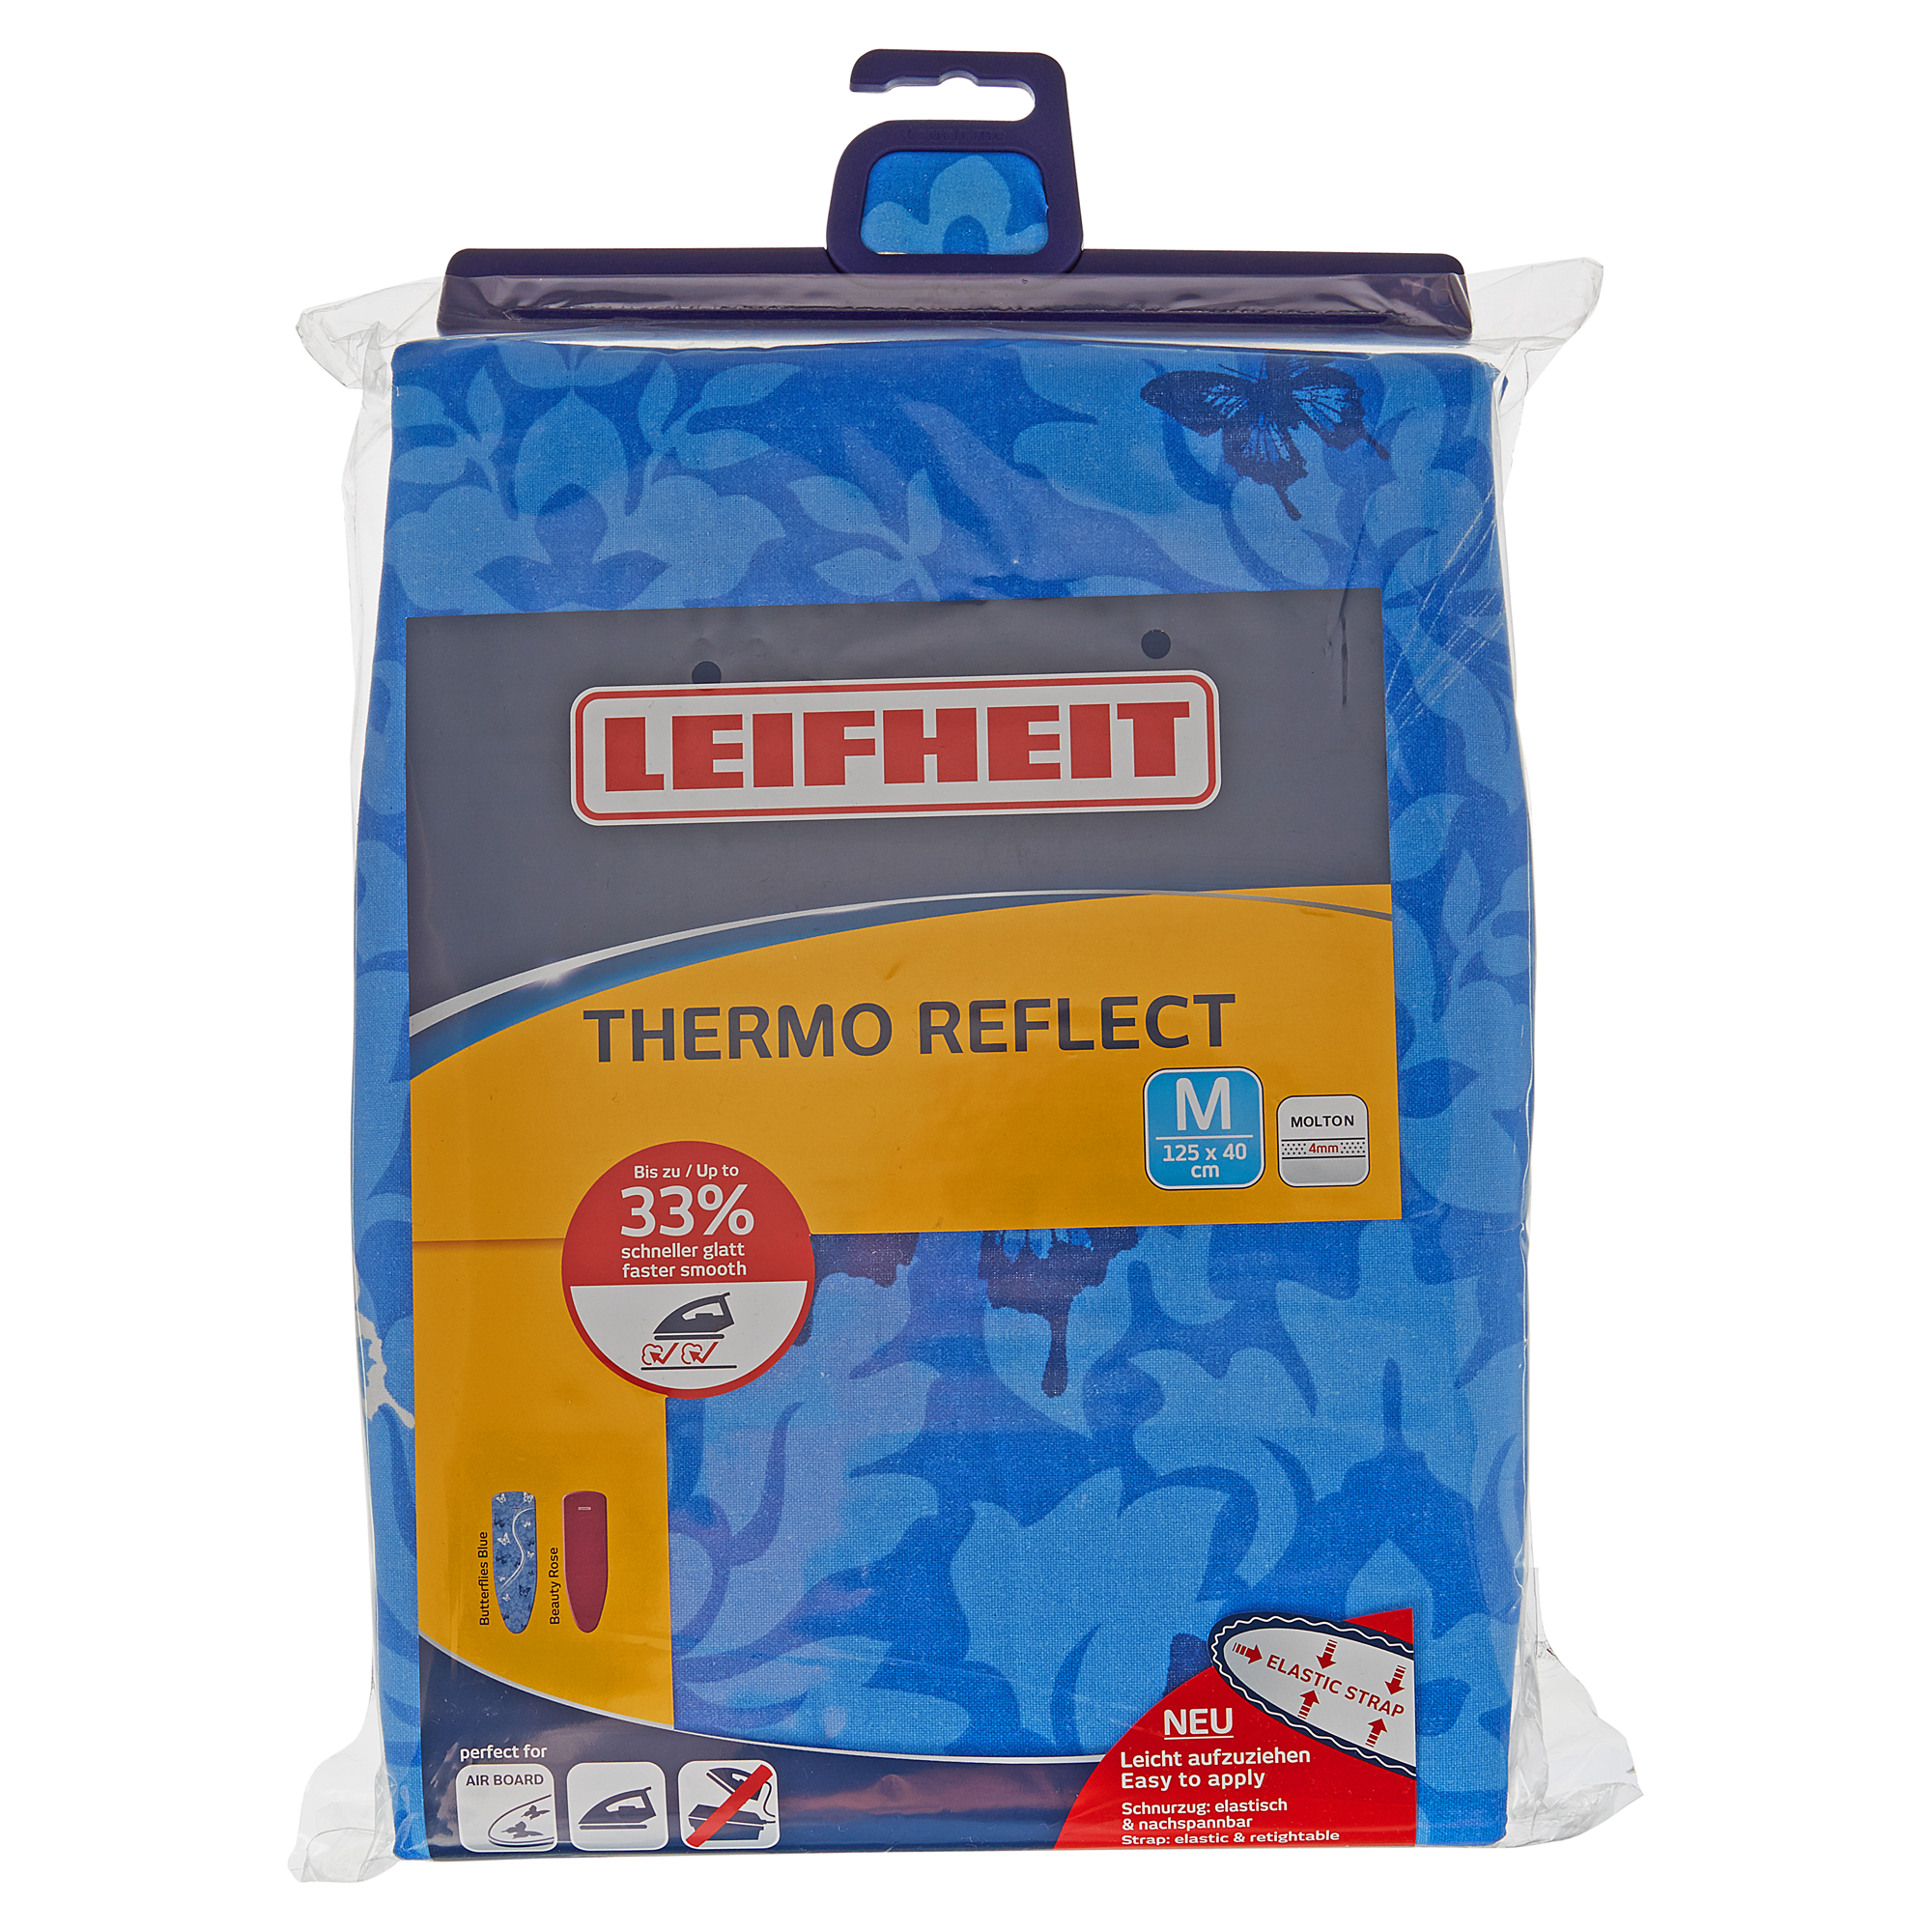 Leifheit Bügeltischbezug „Thermo Reflect“ M 125 x 40 cm